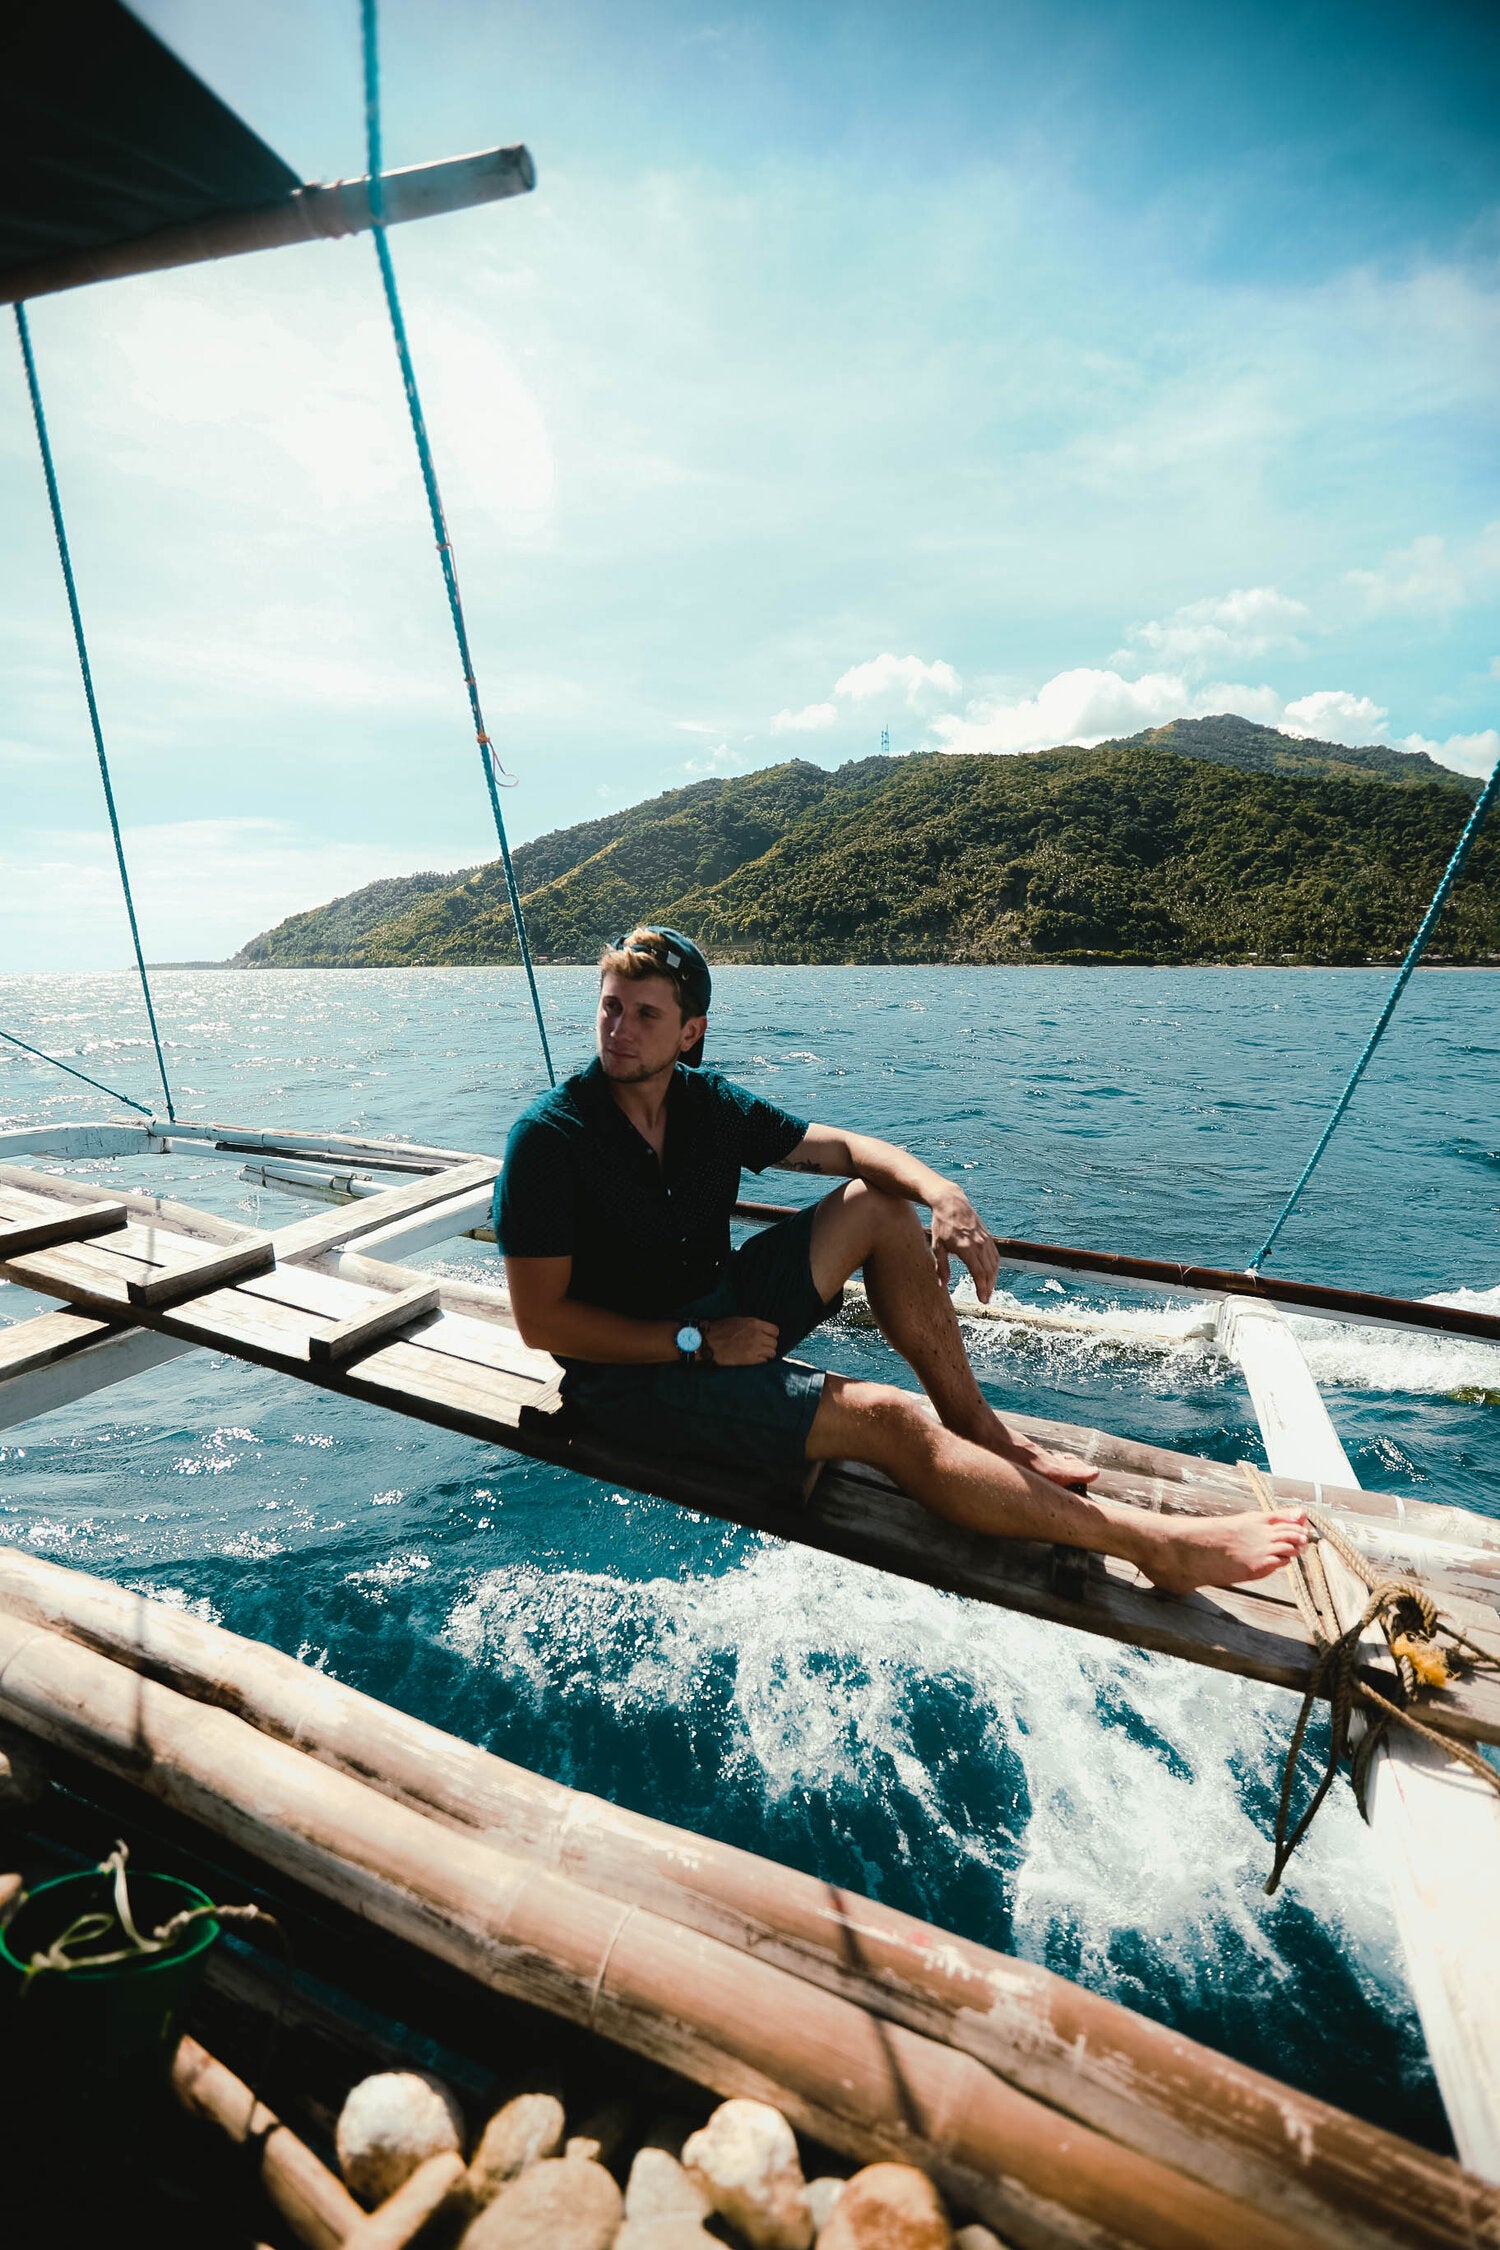 Lost LeBlanc on boat on way to Cresta De Gallo, Philippines